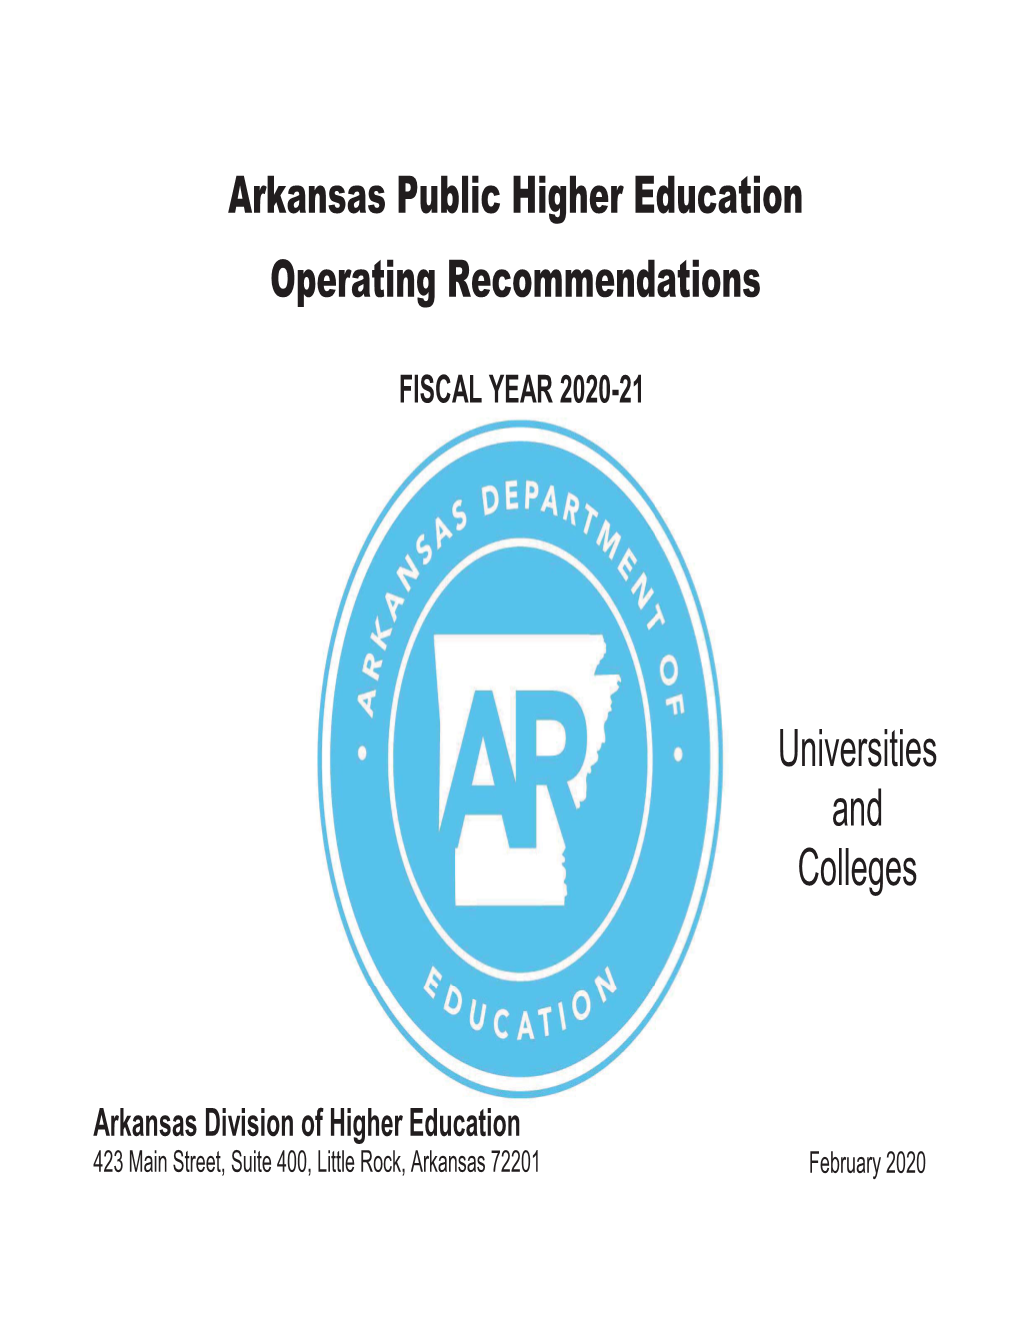 Arkansas Public Higher Education Operating Recommendations